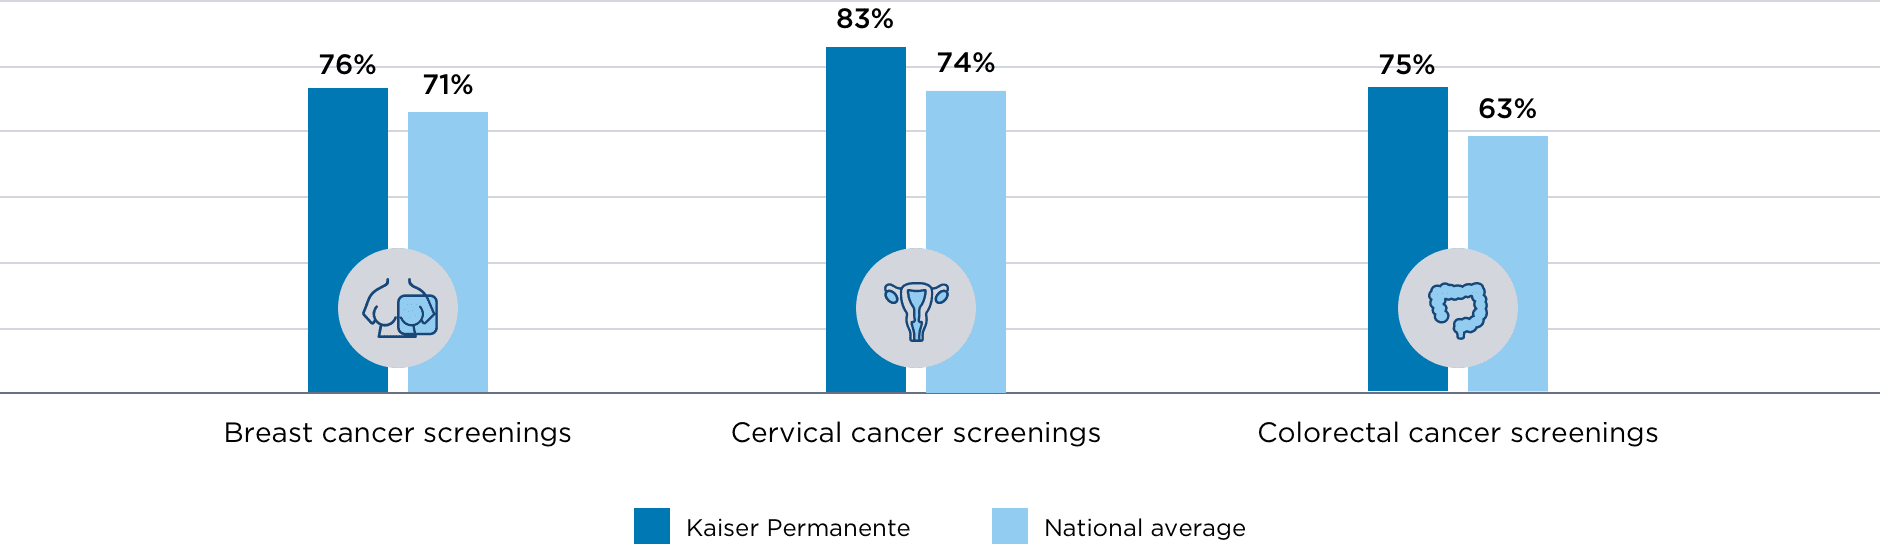 76% breast cancer screening rate at Kaiser Permanente, vs. 71% national average. 83% cervical cancer screening rate at Kaiser Permanente, vs. 74% national average. 75% colorectal cancer screening rate at Kaiser Permanente, vs. 63% national average.